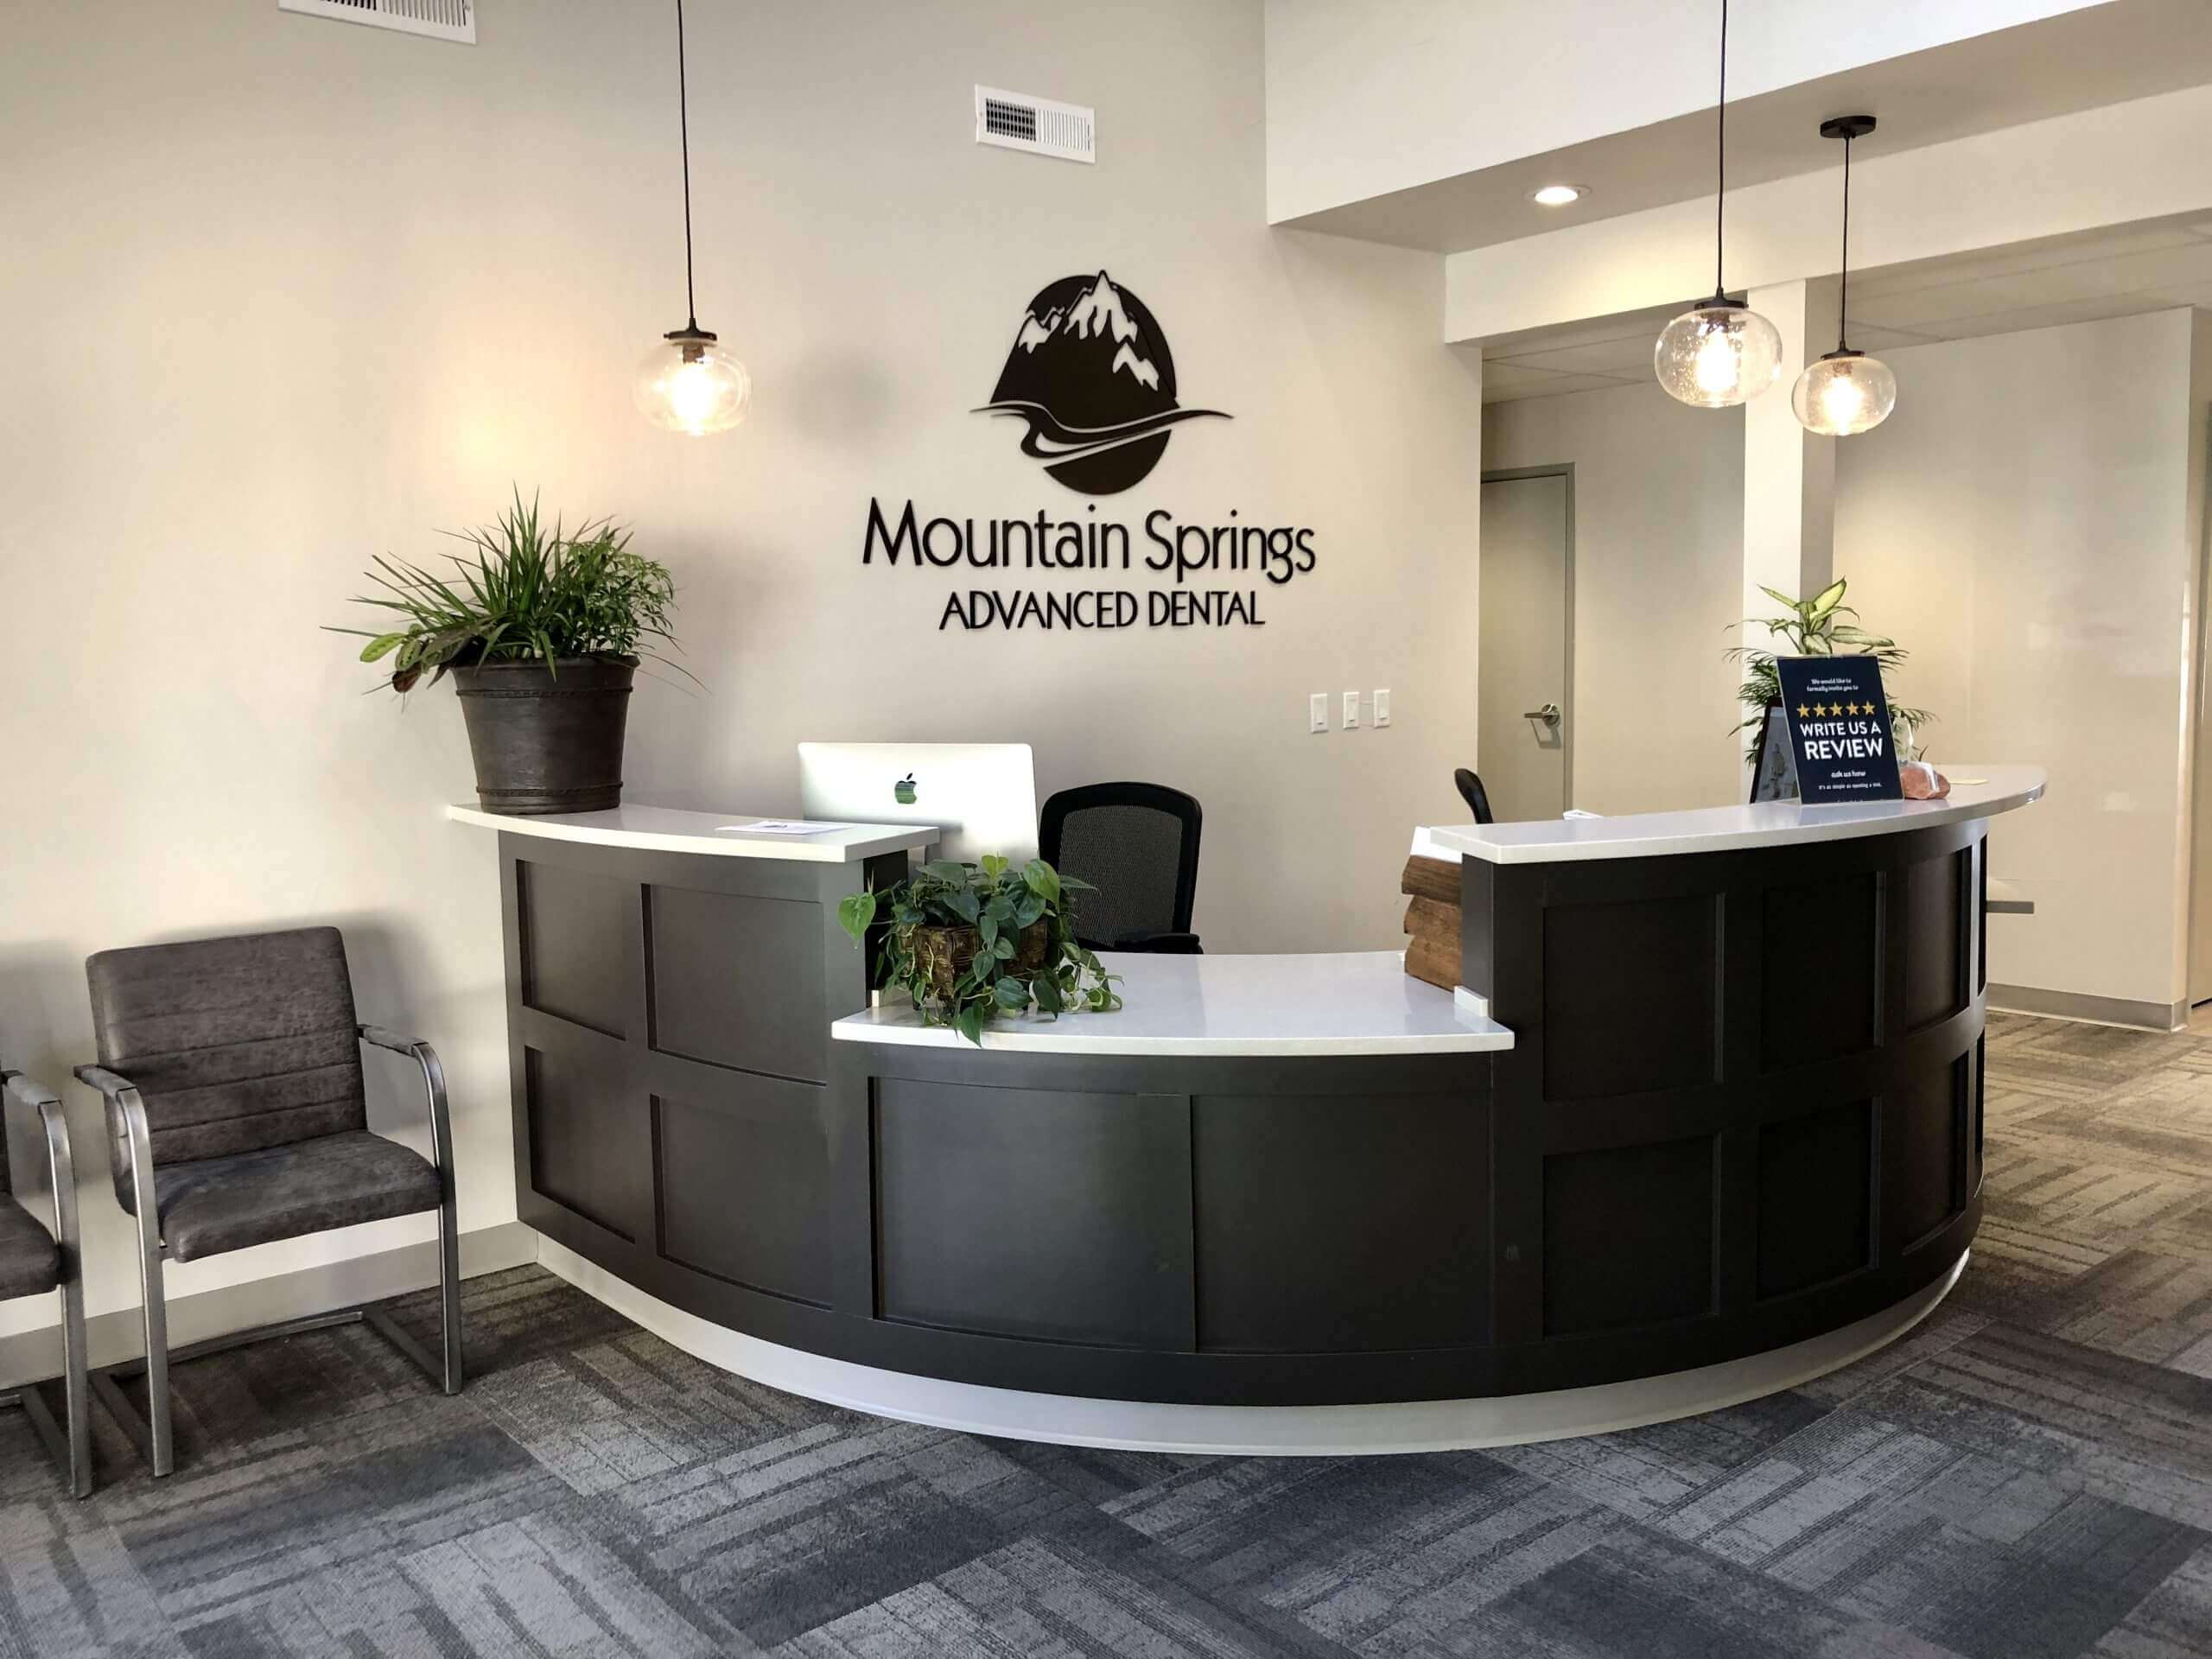 Mountain Springs Advanced Dental Office